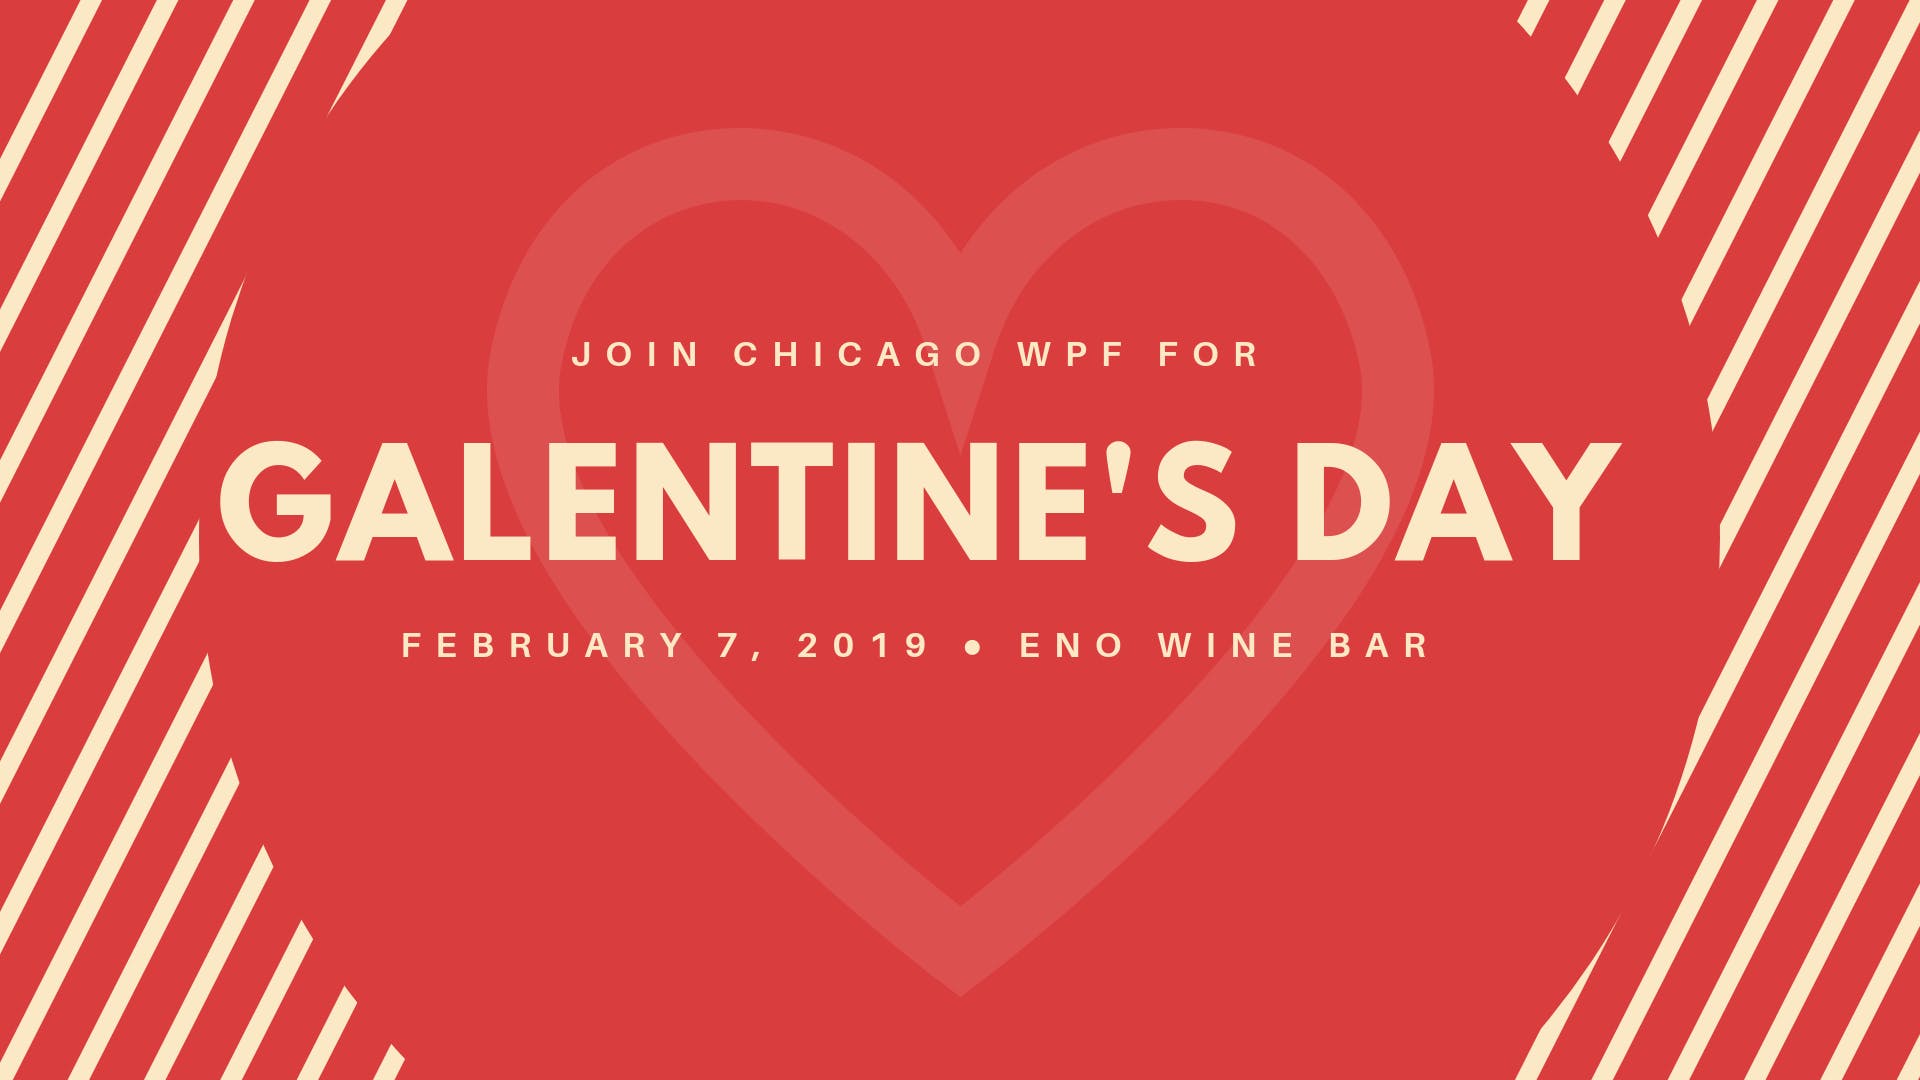 Chicago WPF. Galentine's Day Wine Tasting FEB 2019